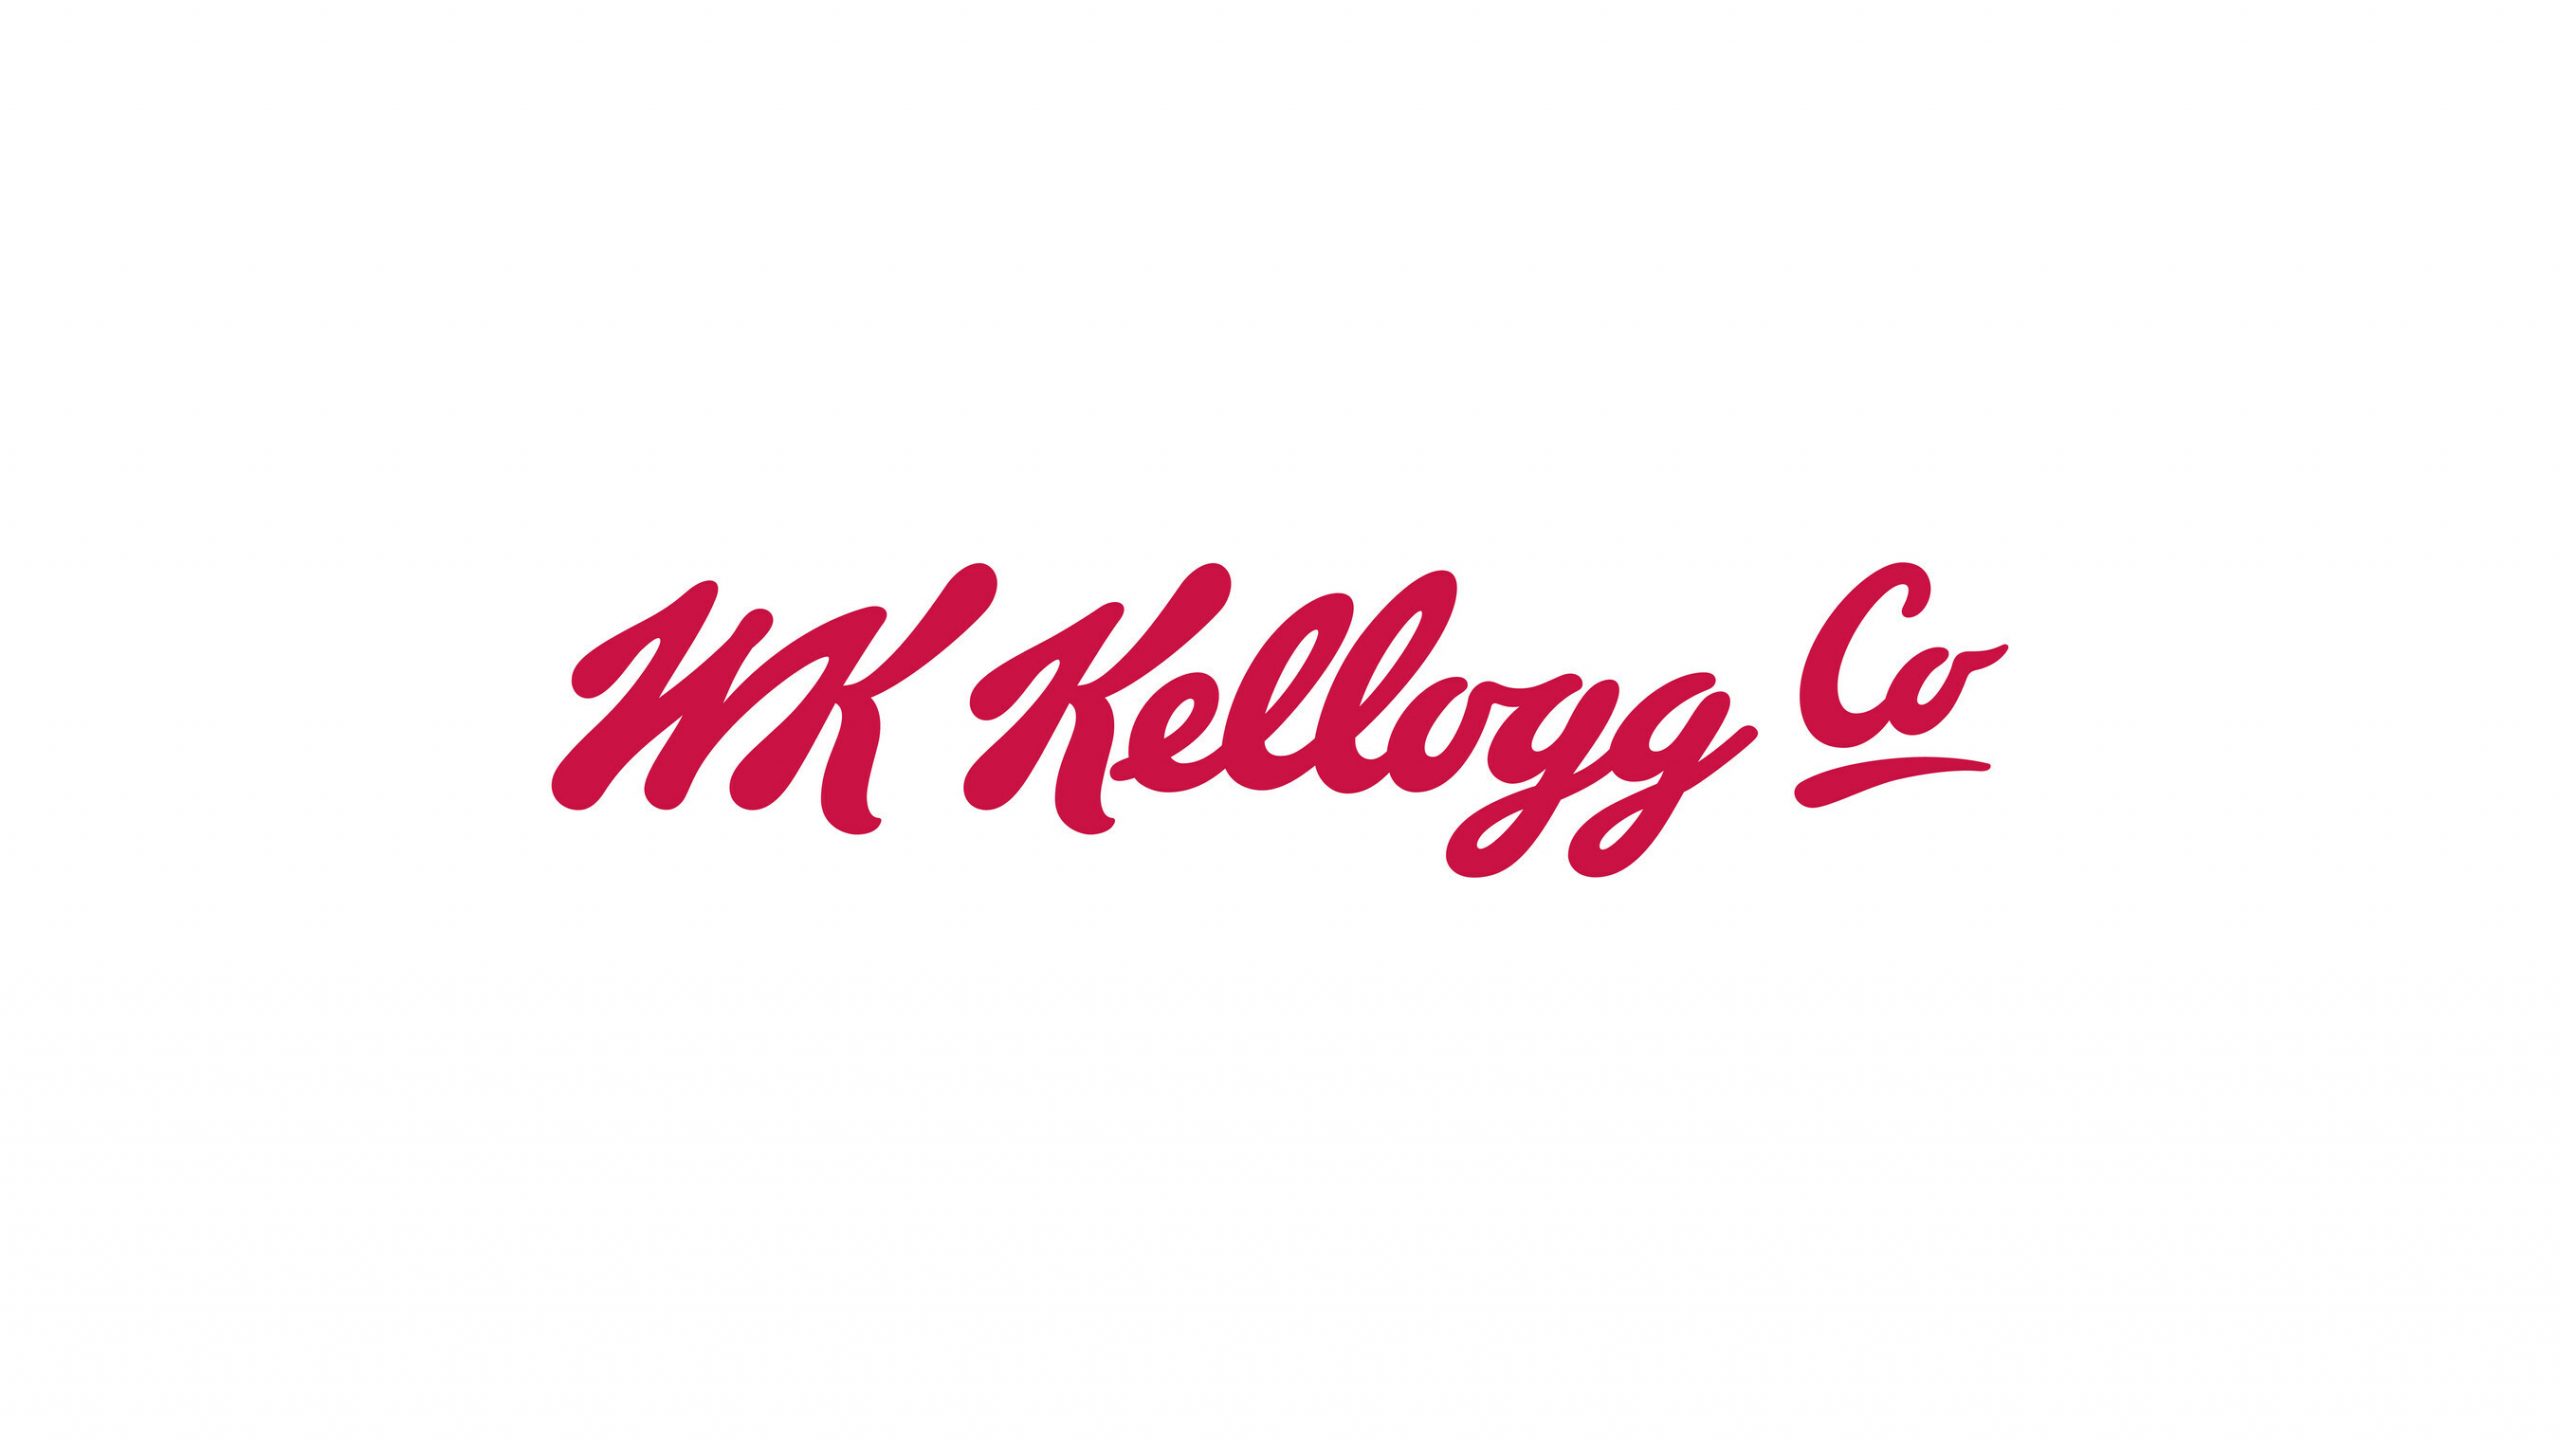 Kellogg Company Announces Spin-off Plans: Kellanova and WK Kellogg Co Set to Emerge